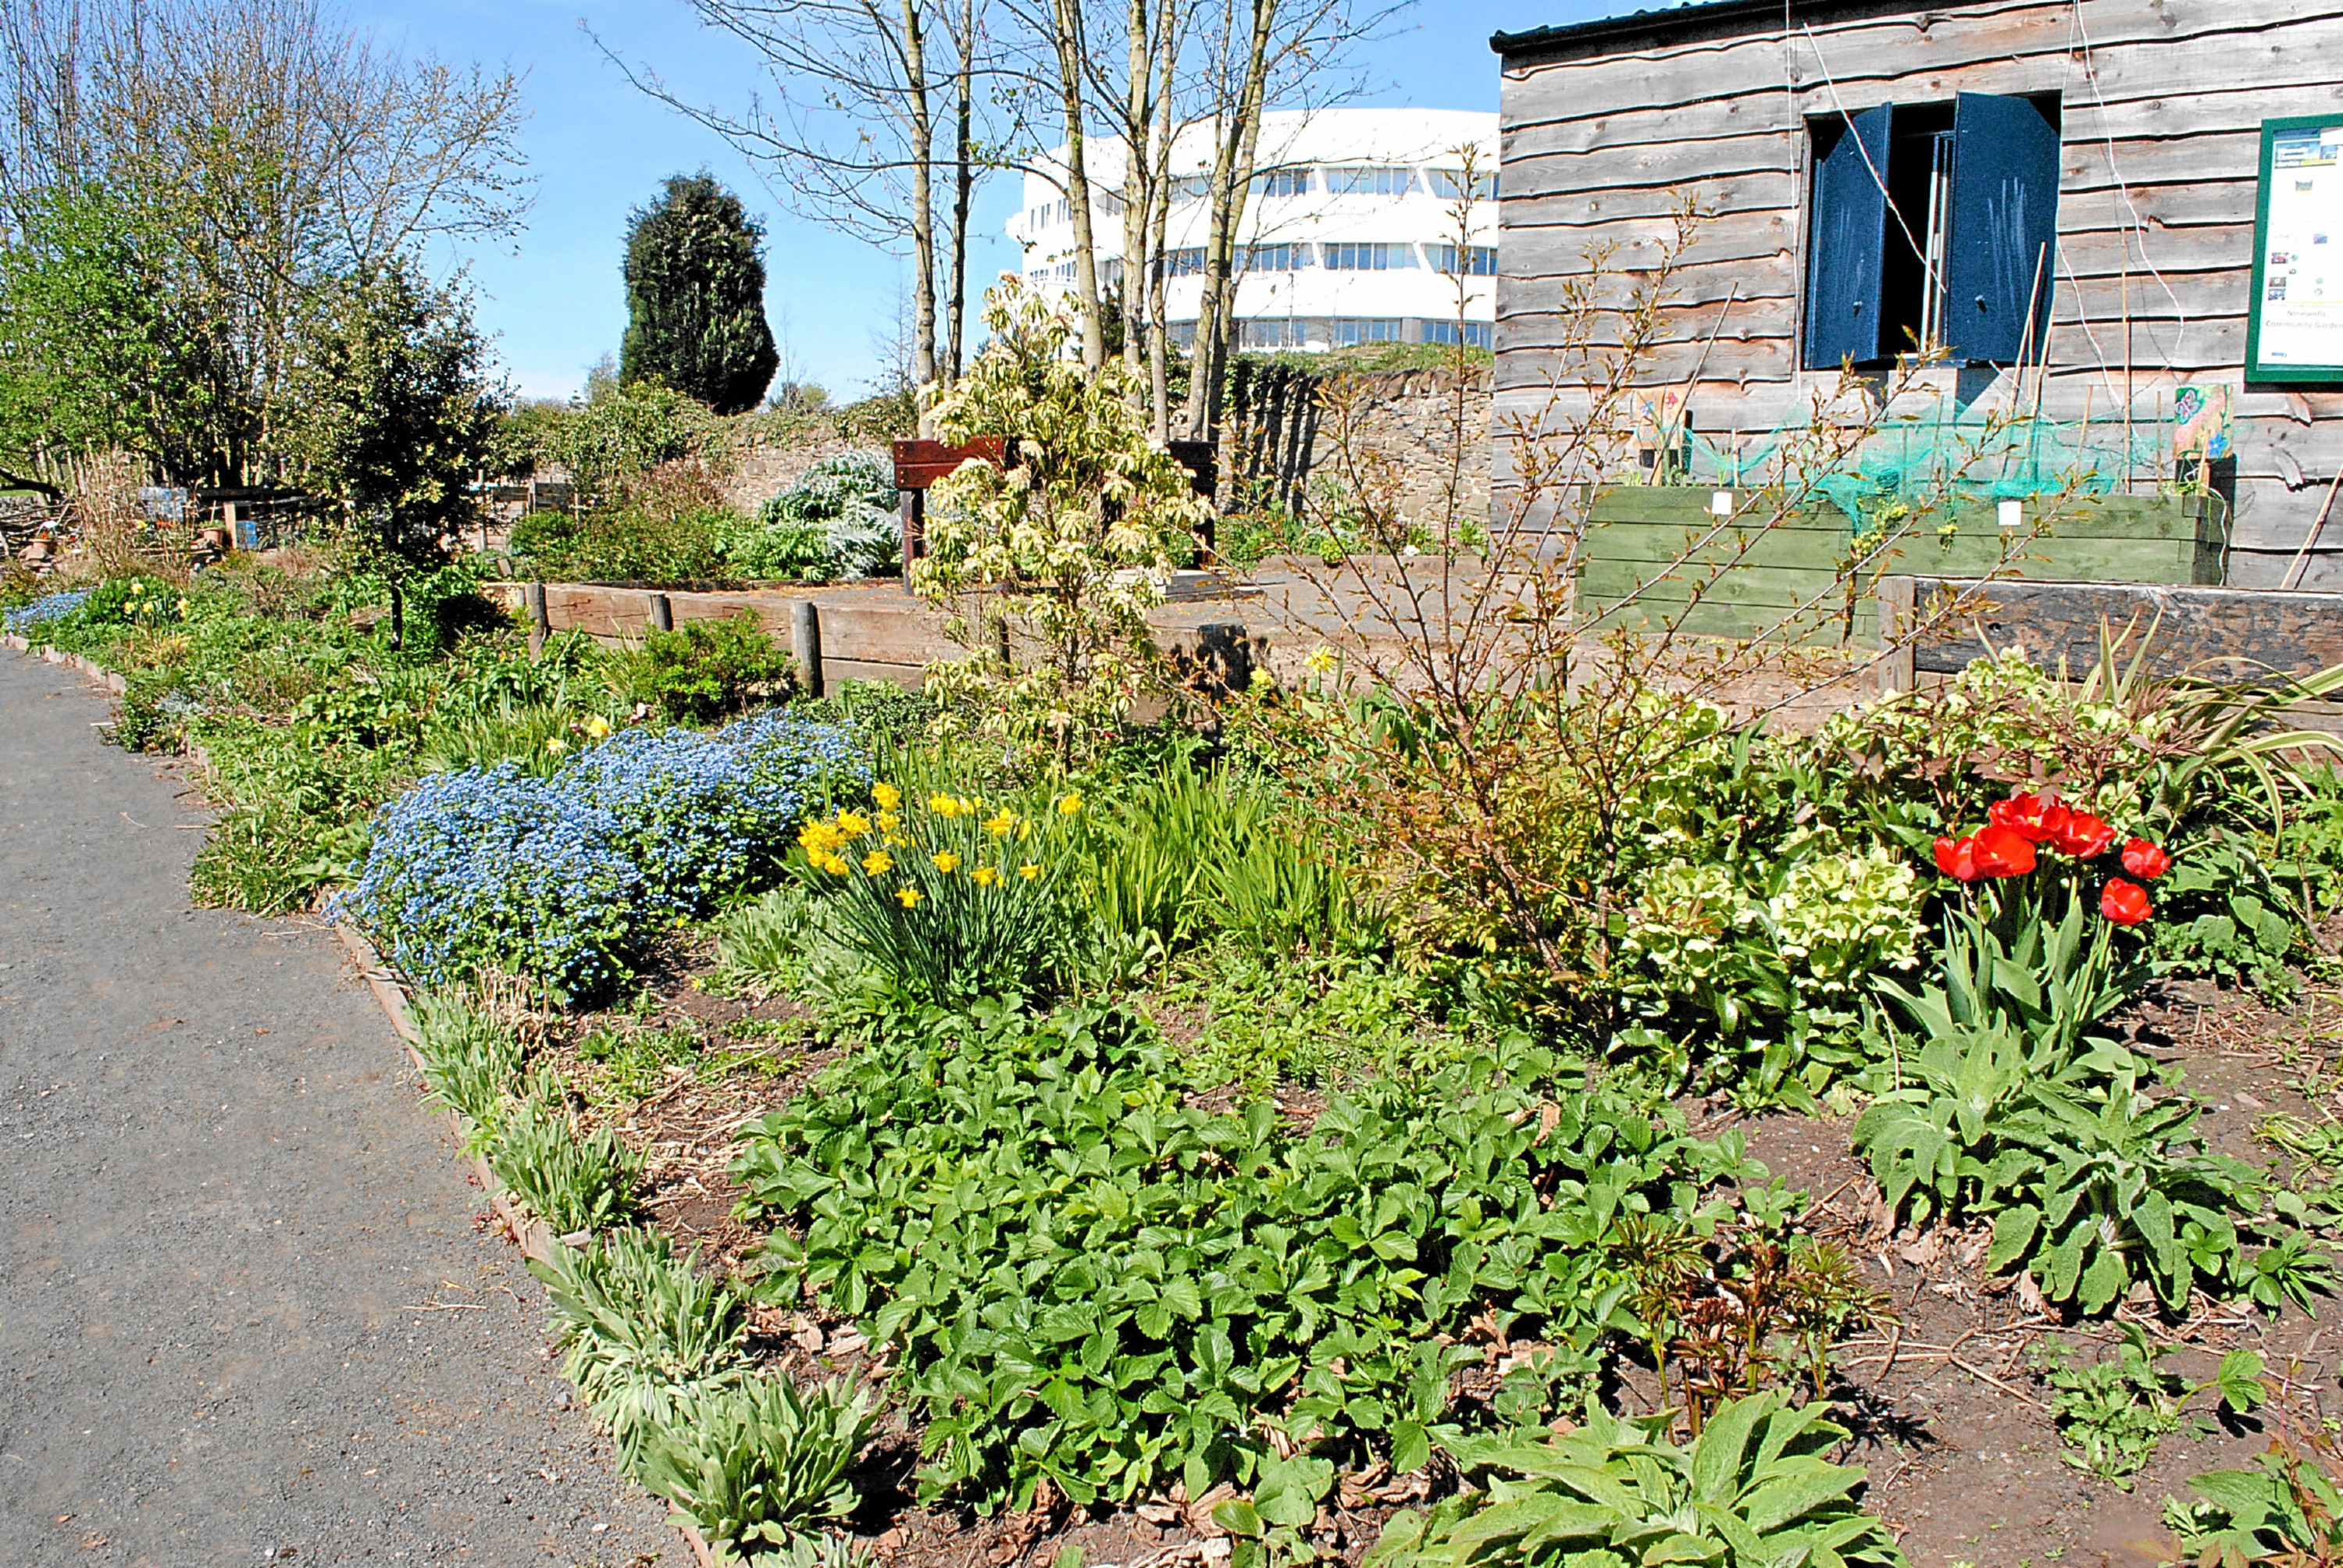 The Ninewells Community Garden.